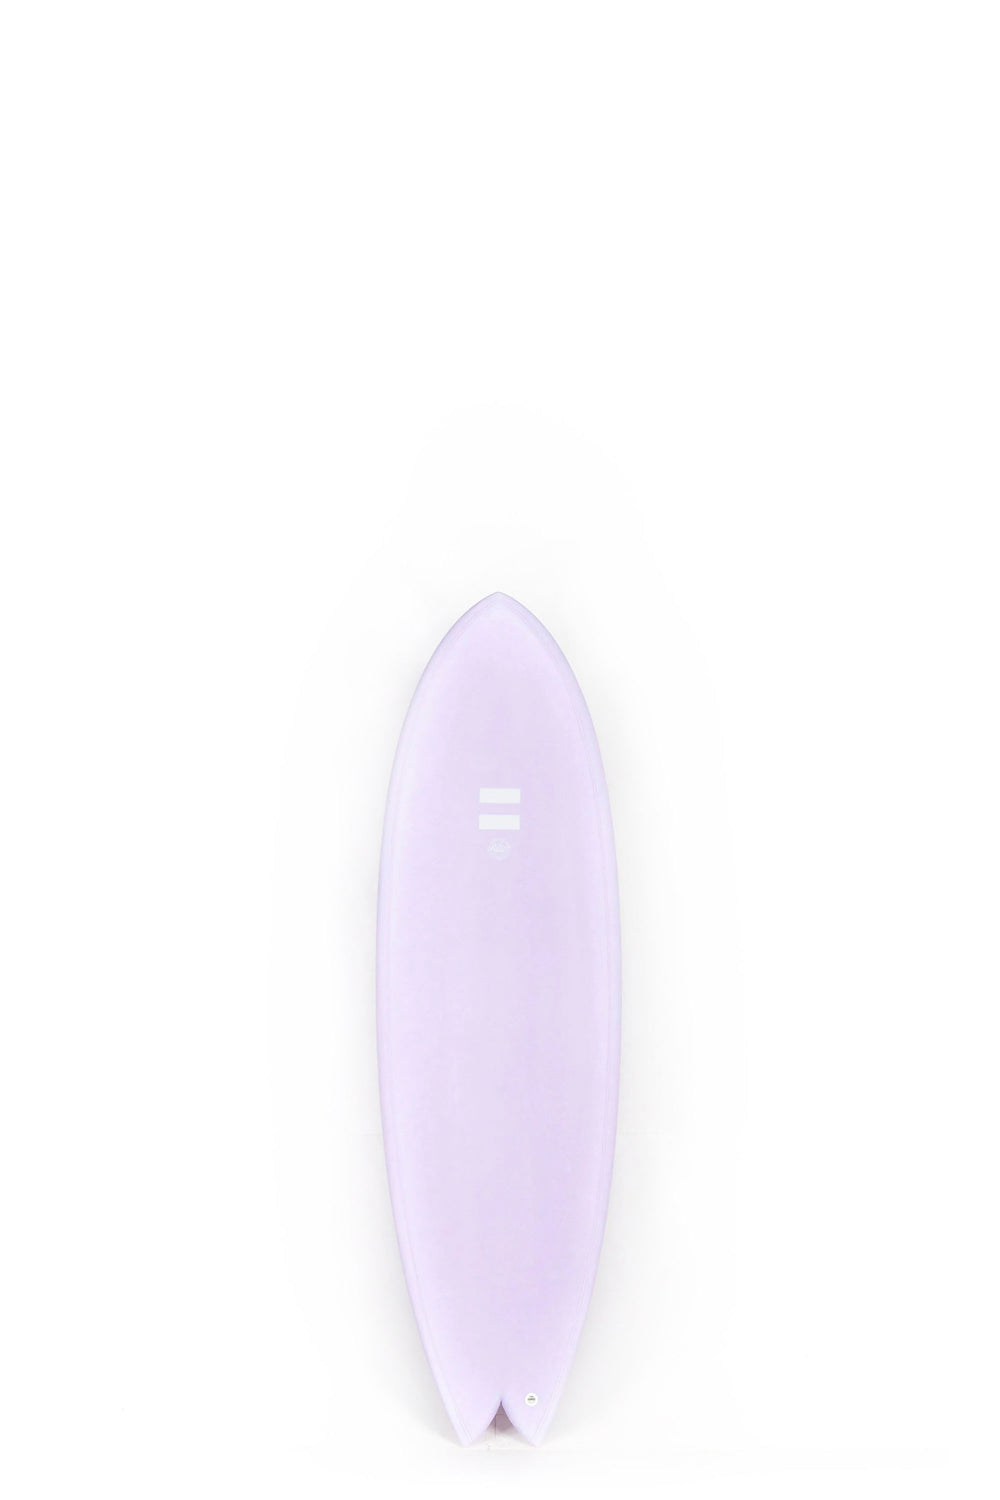 Indio Surfboards - COMBO Purple - 5'4